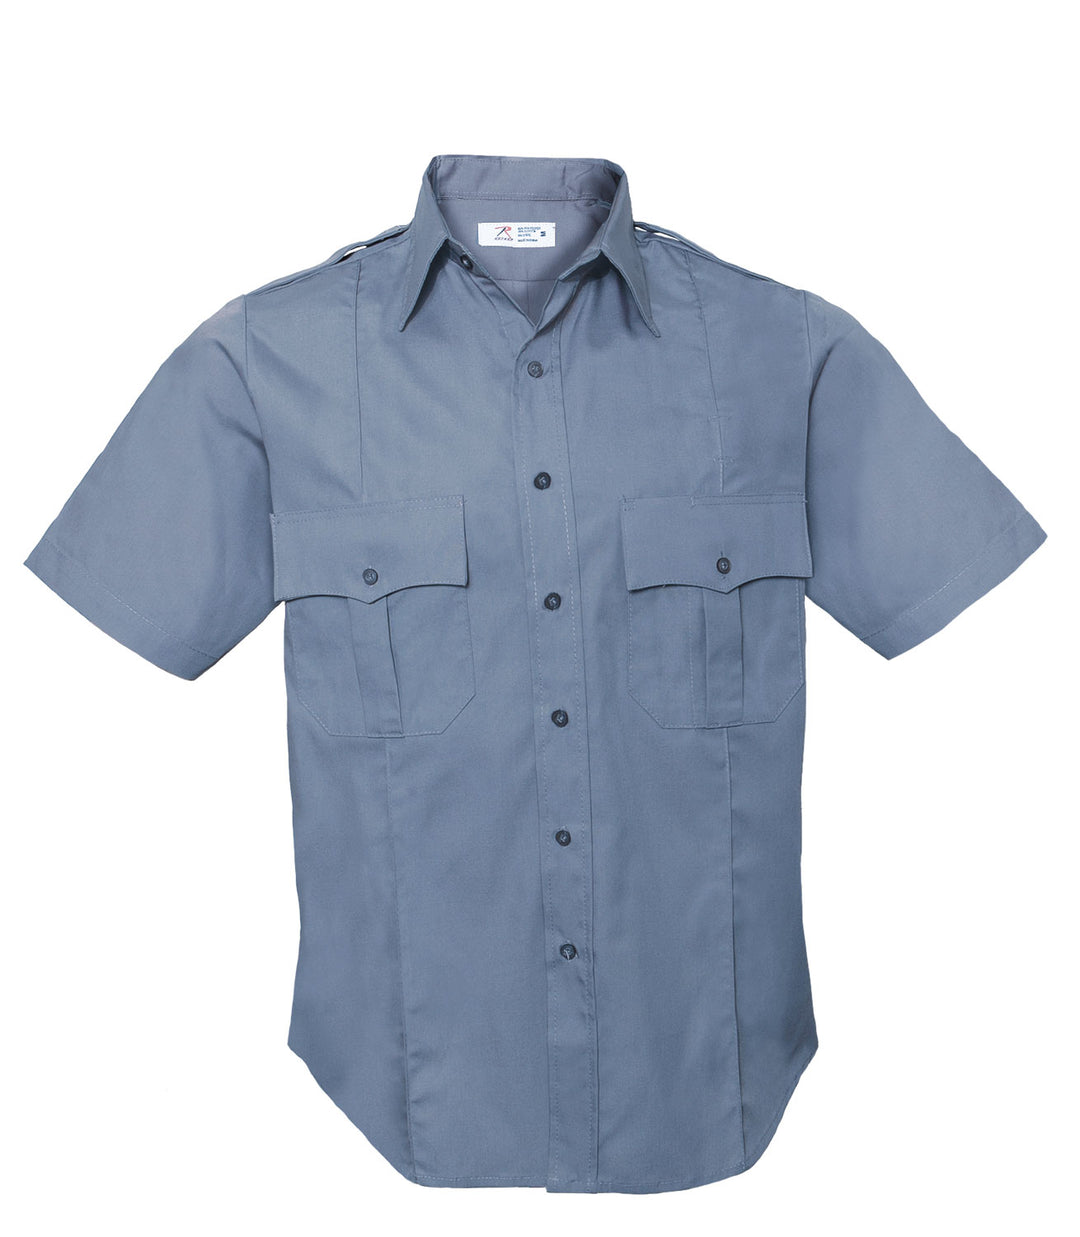 Mens Short Sleeve Uniform Shirt by Rothco